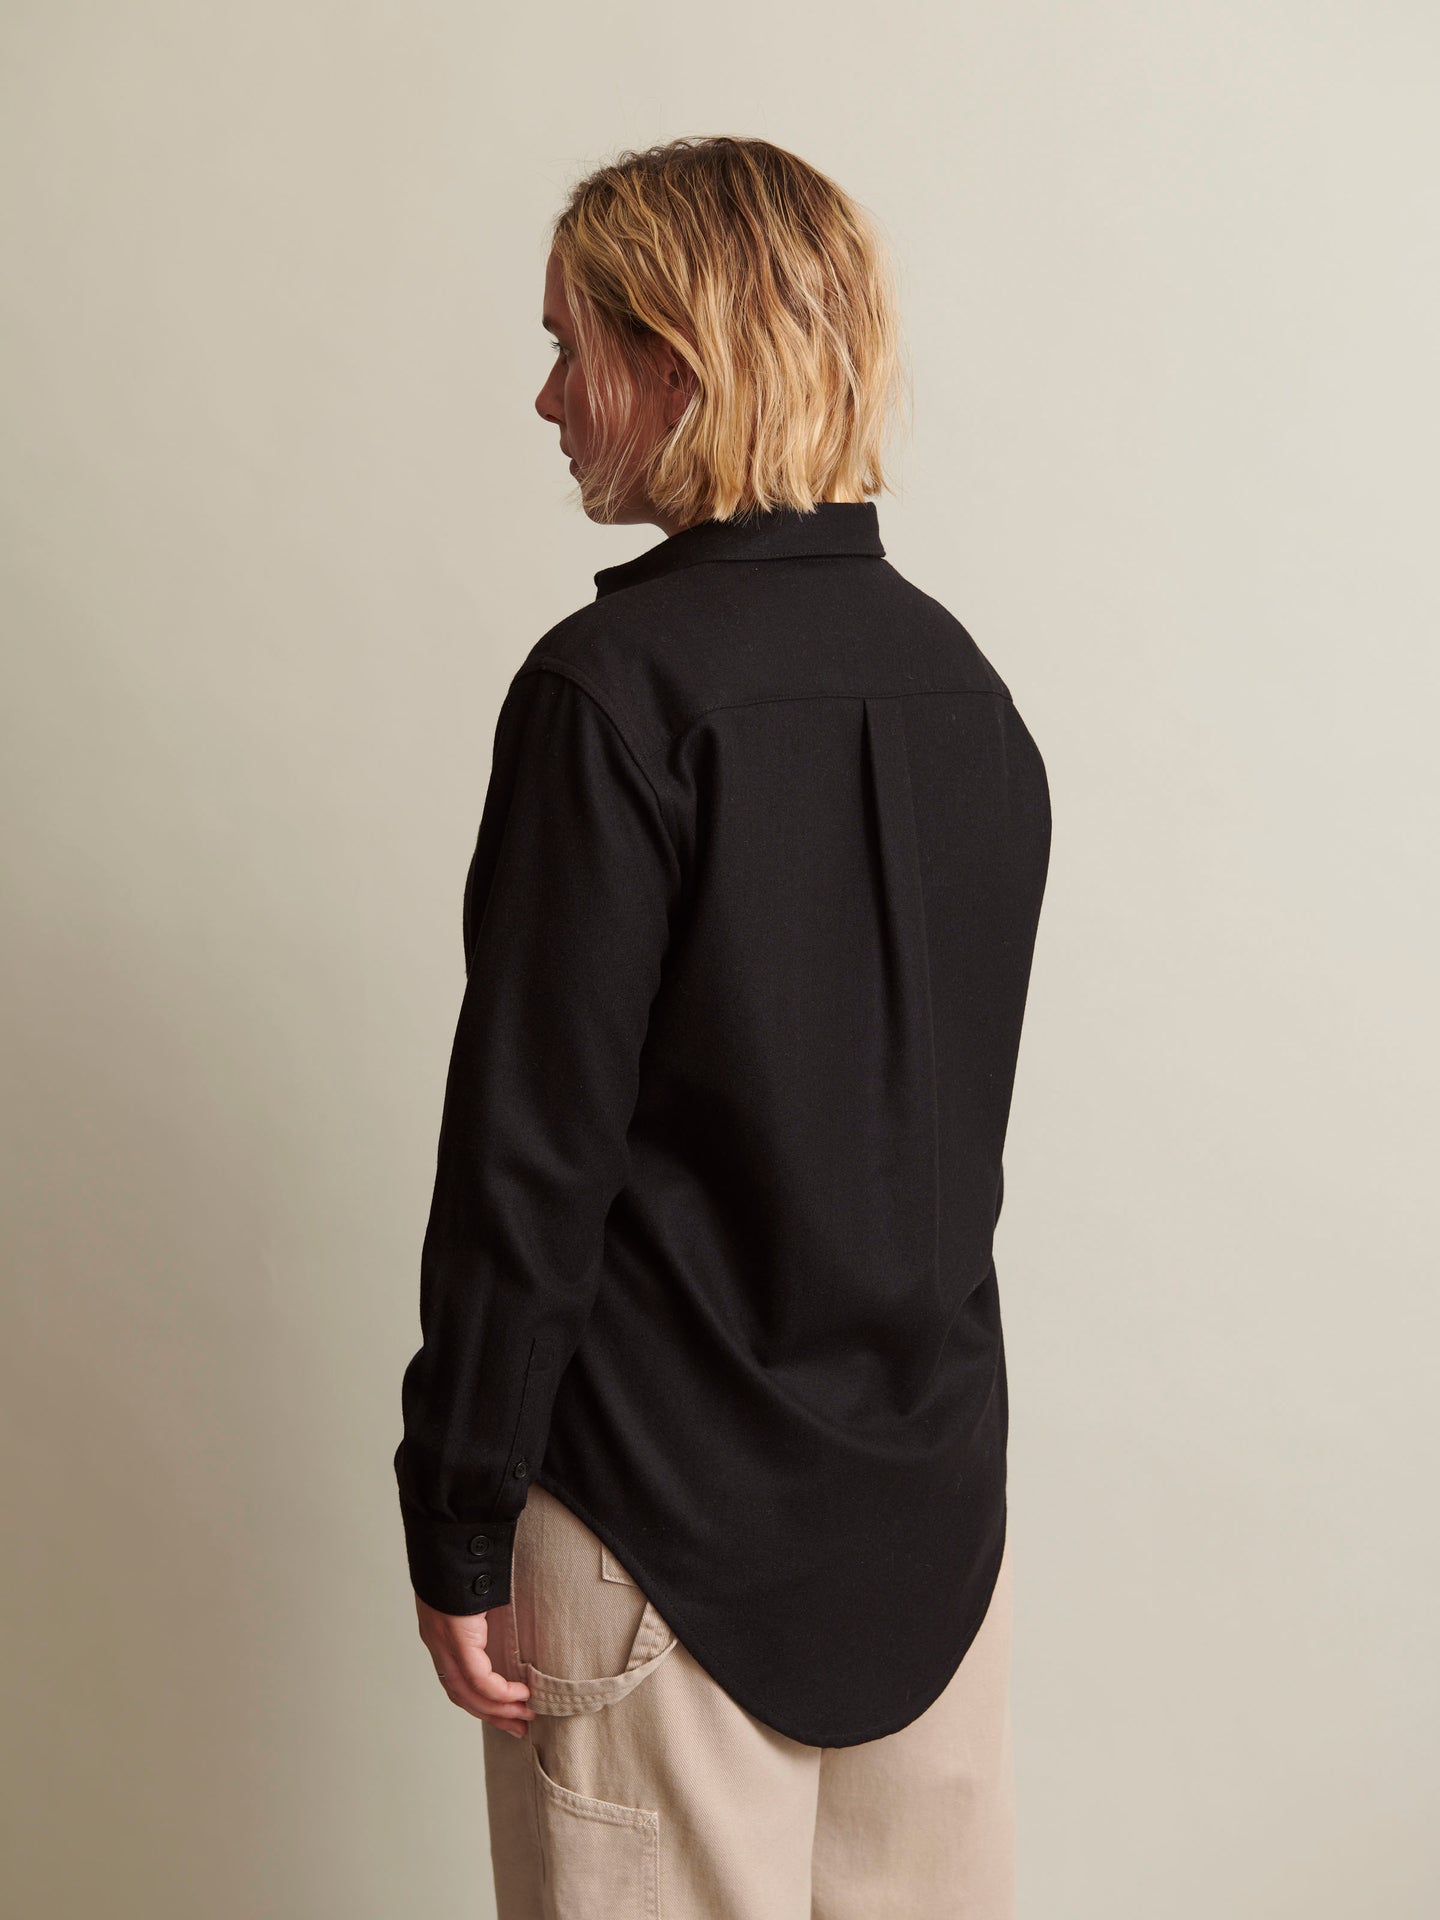 The New Oxford Shirt in 'Enamel' Black Merino Wool | NAOMI NOMI